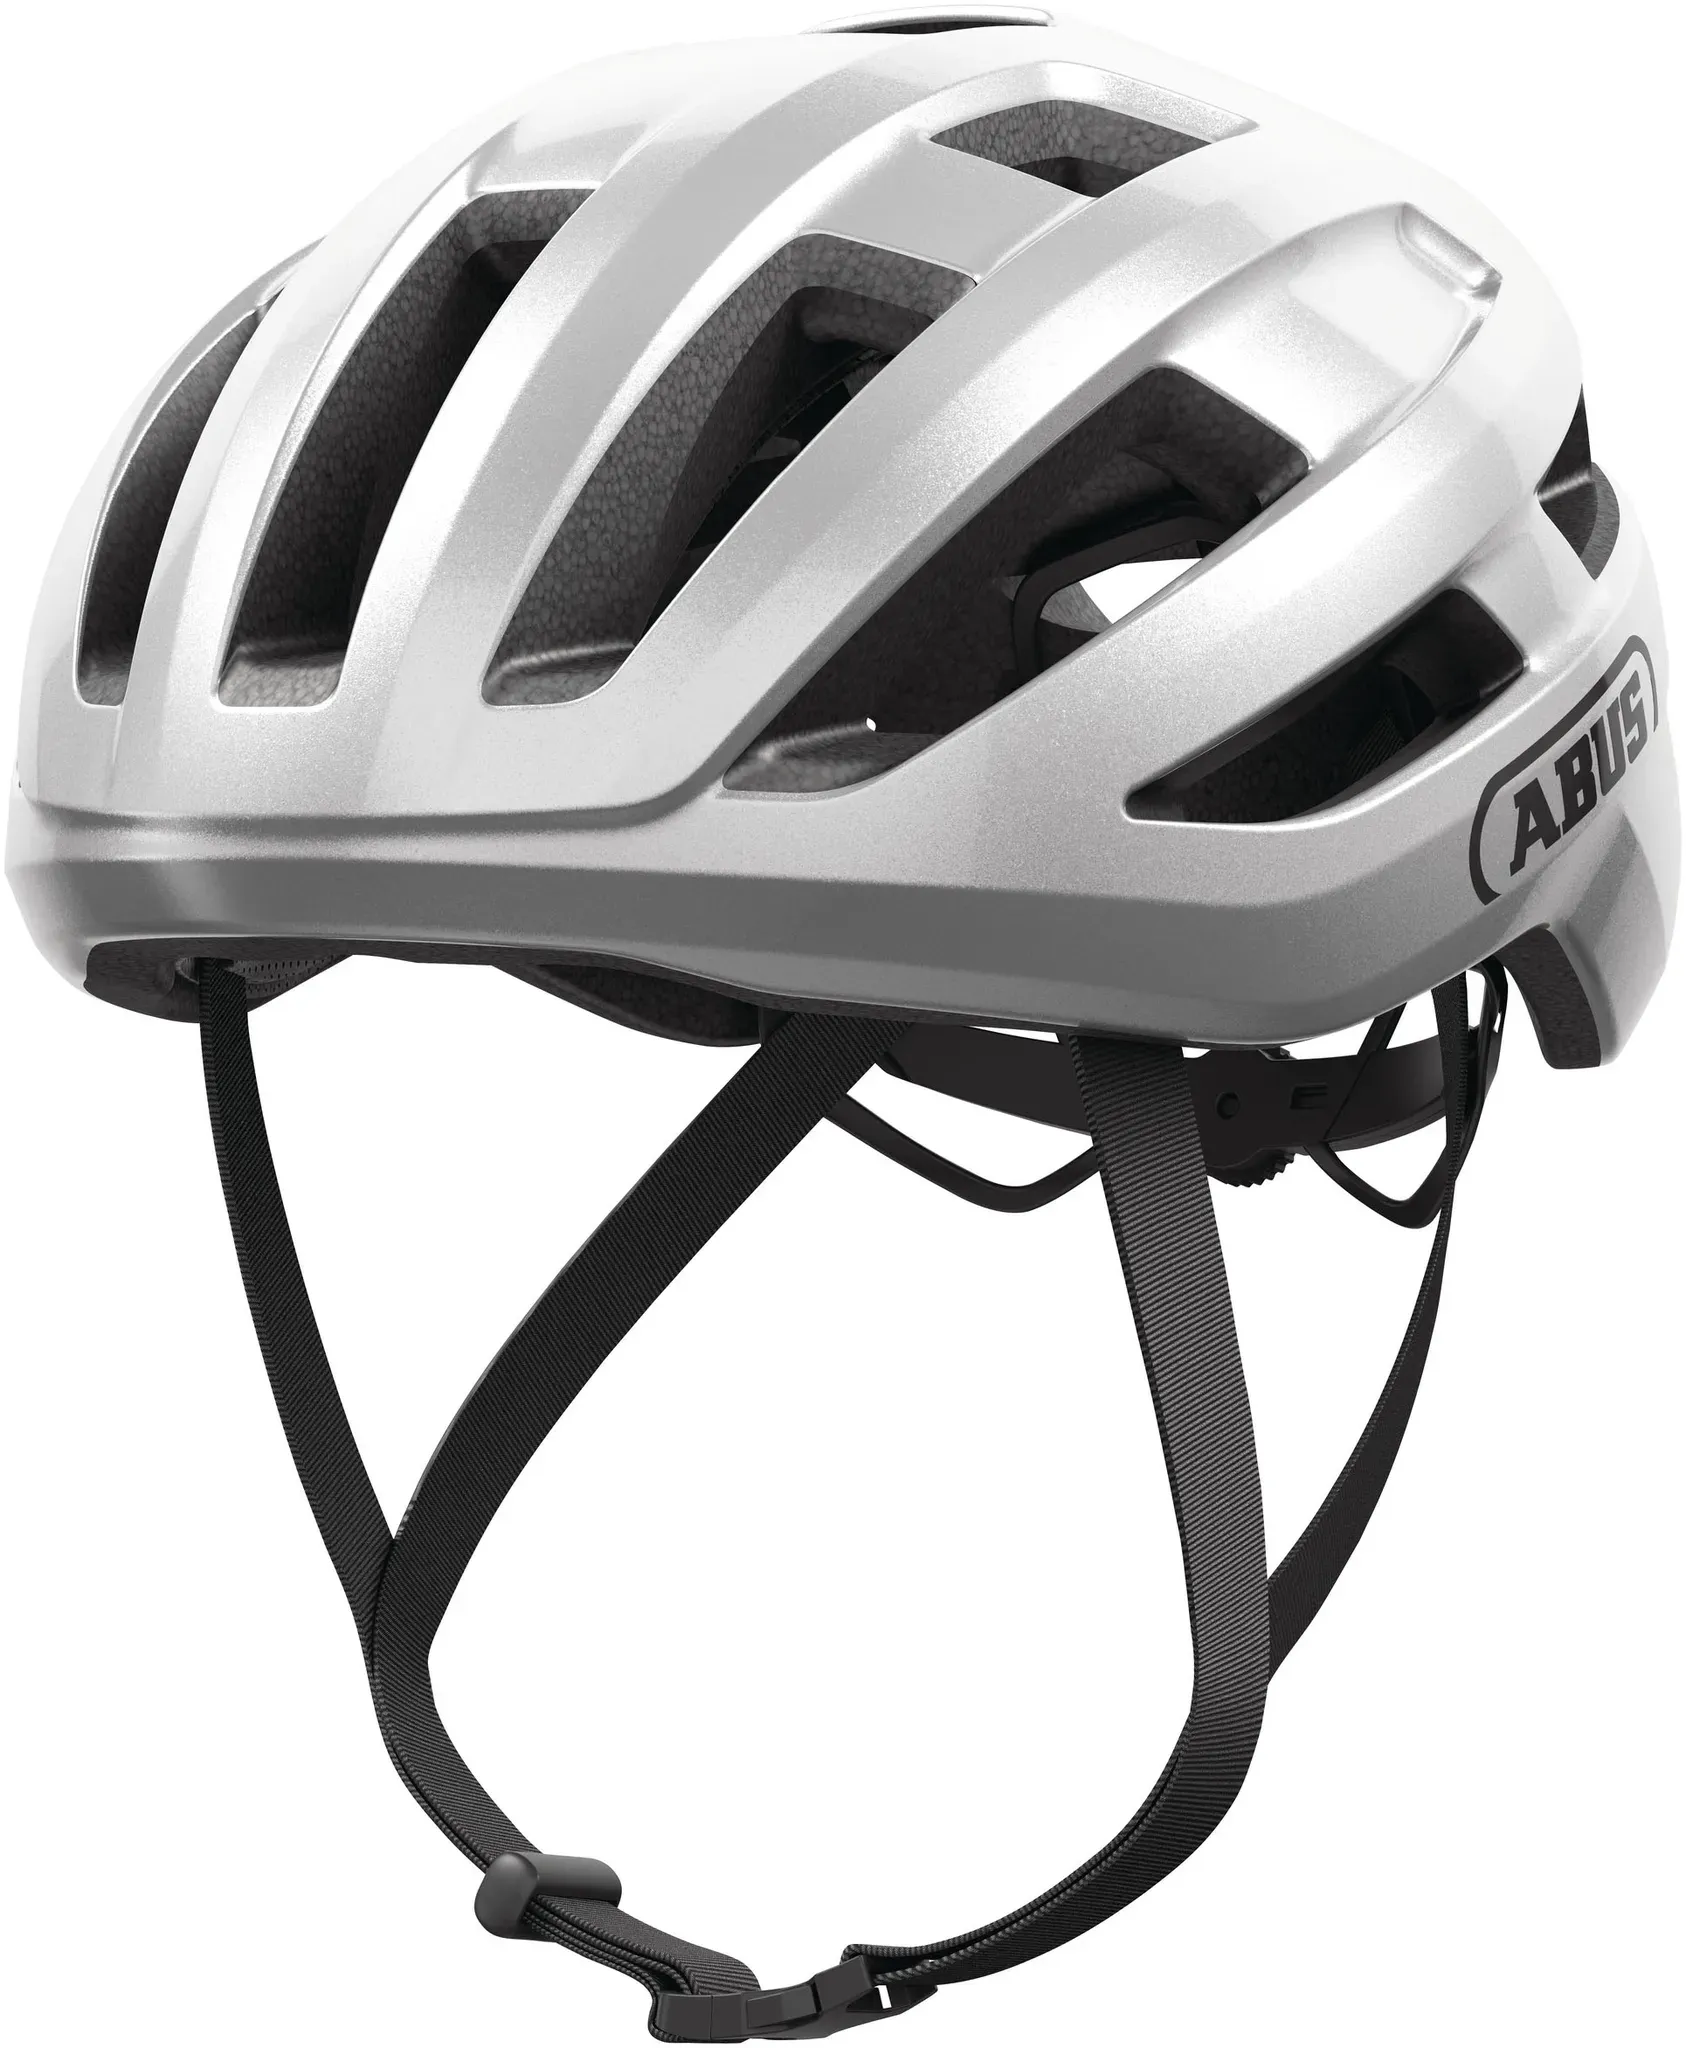 Fahrradhelm ABUS "POWERDOME" Helme Gr. L Kopfumfang: 57 cm - 61 cm, silberfarben (gleam silver) Fahrradhelme für Erwachsene